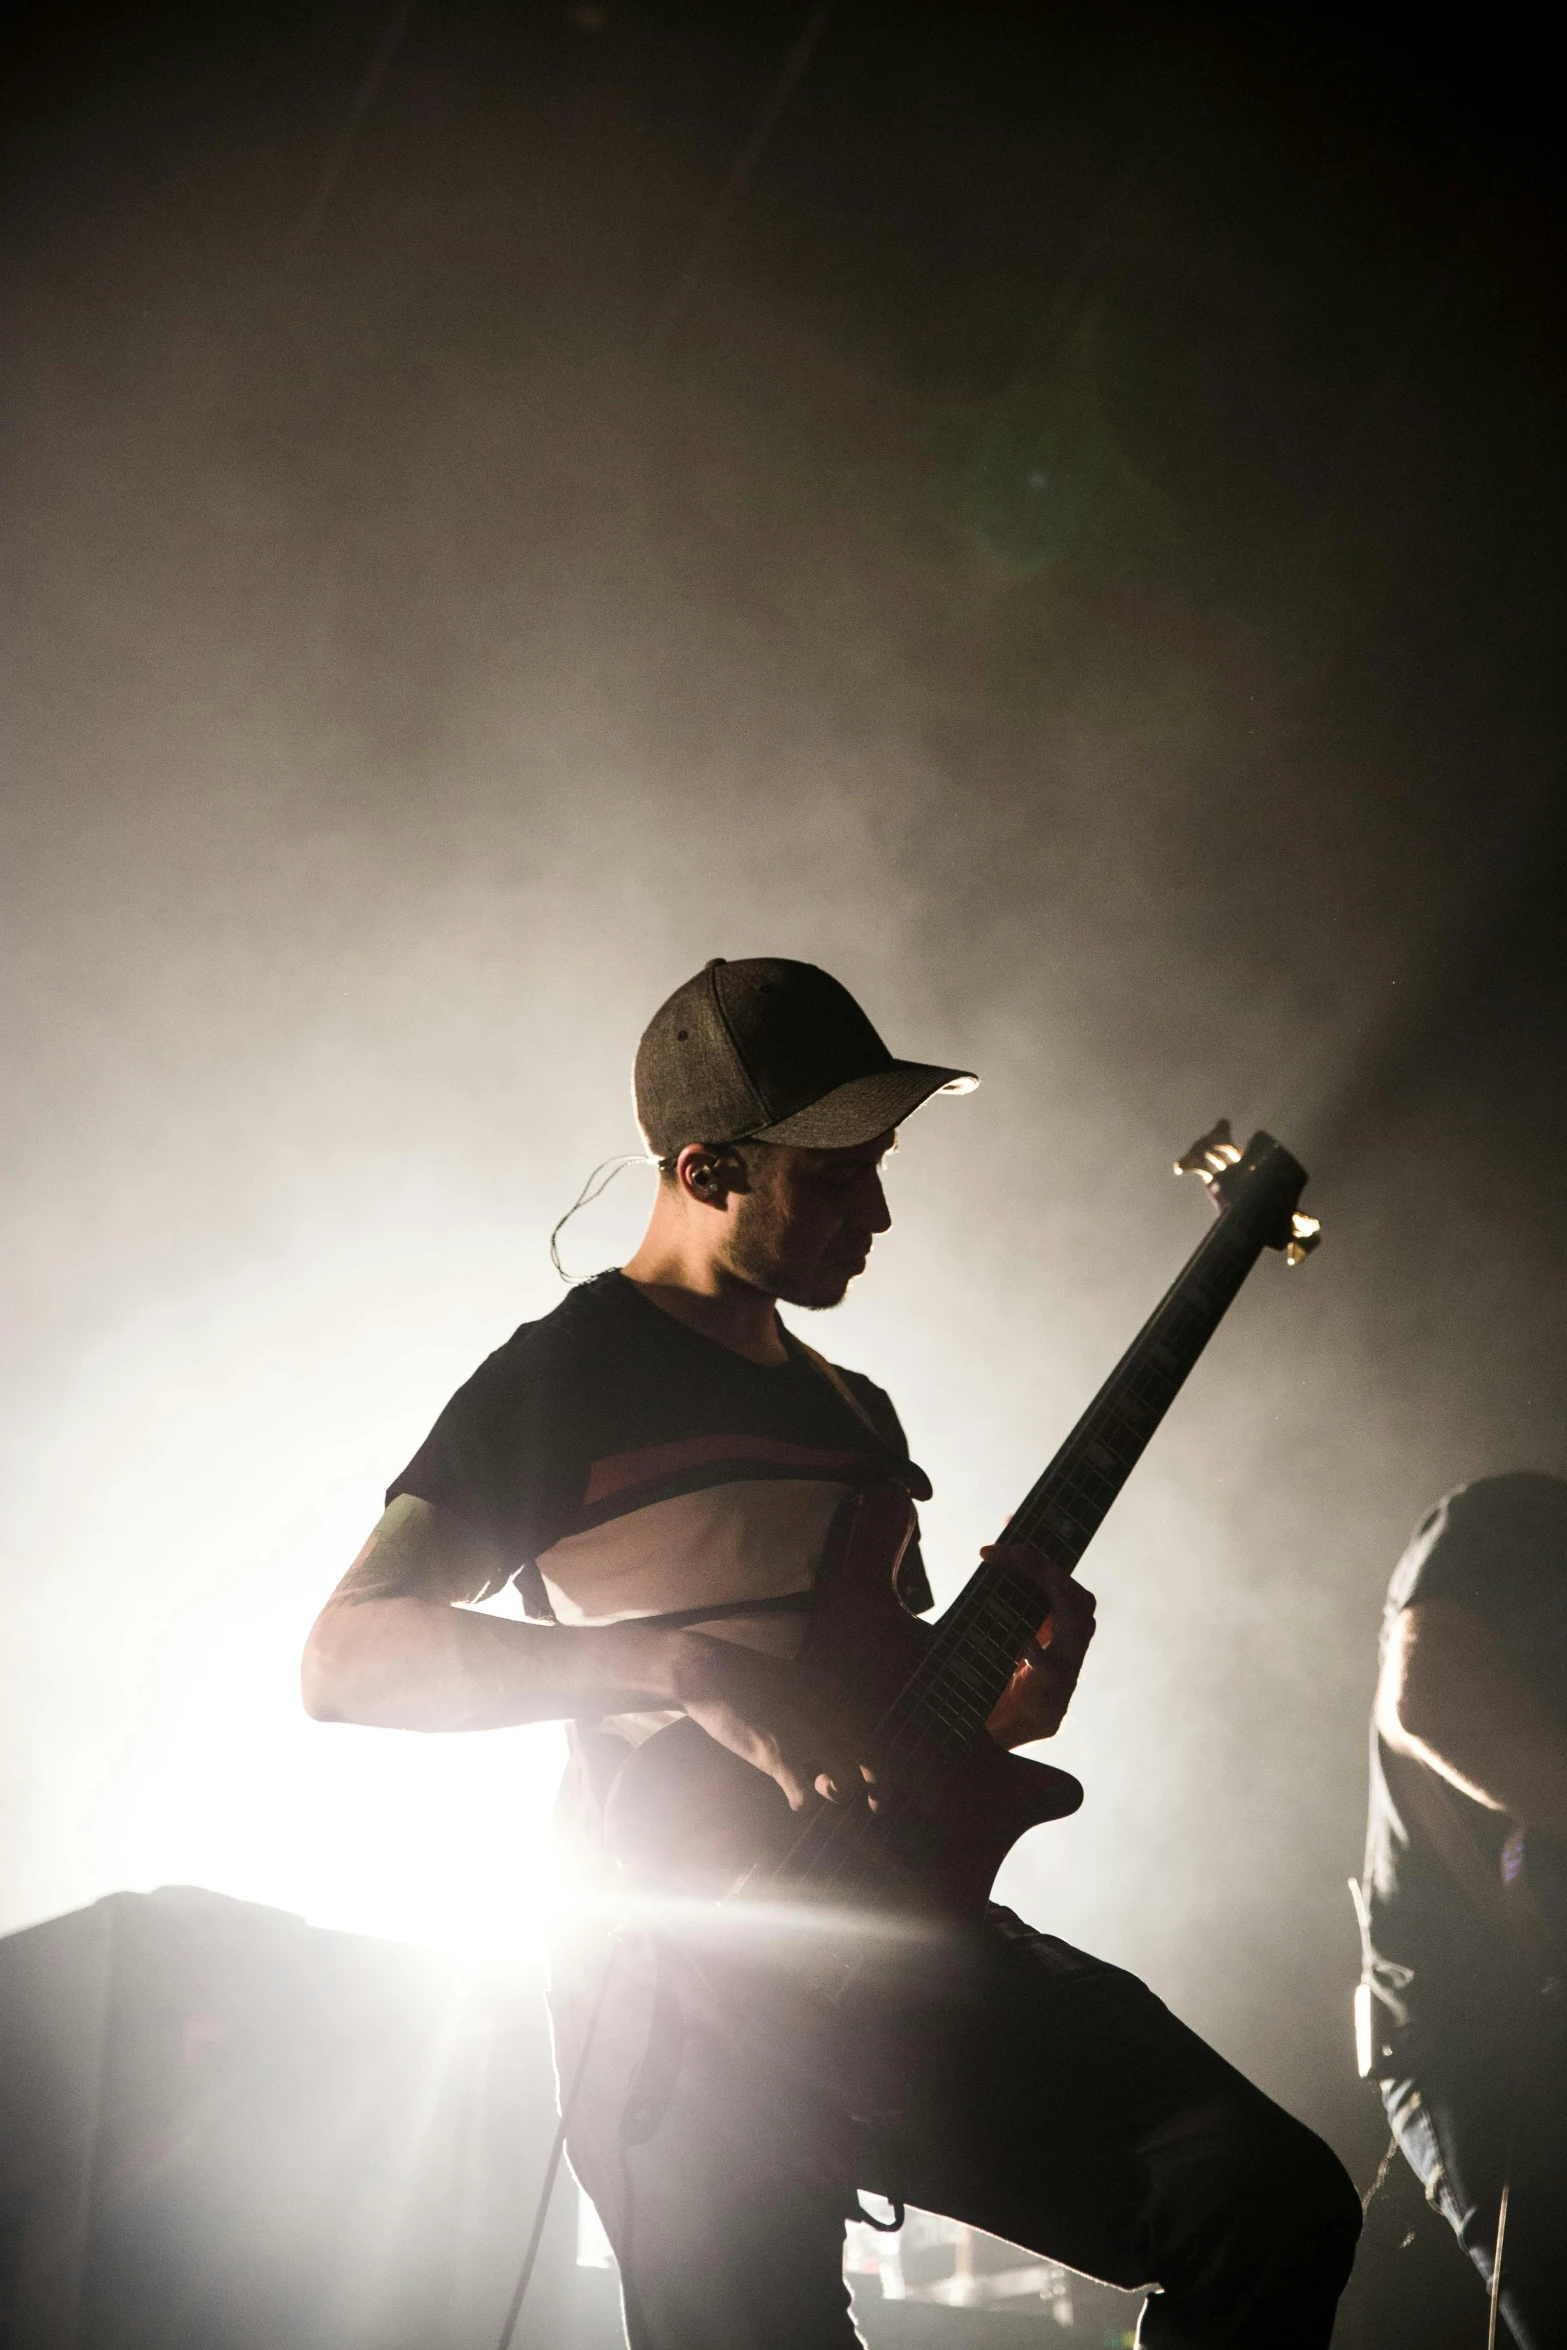 a man holding a guitar on top of a stage, by Robbie Trevino, shigeto koyama, demon days, sports photo, hazy